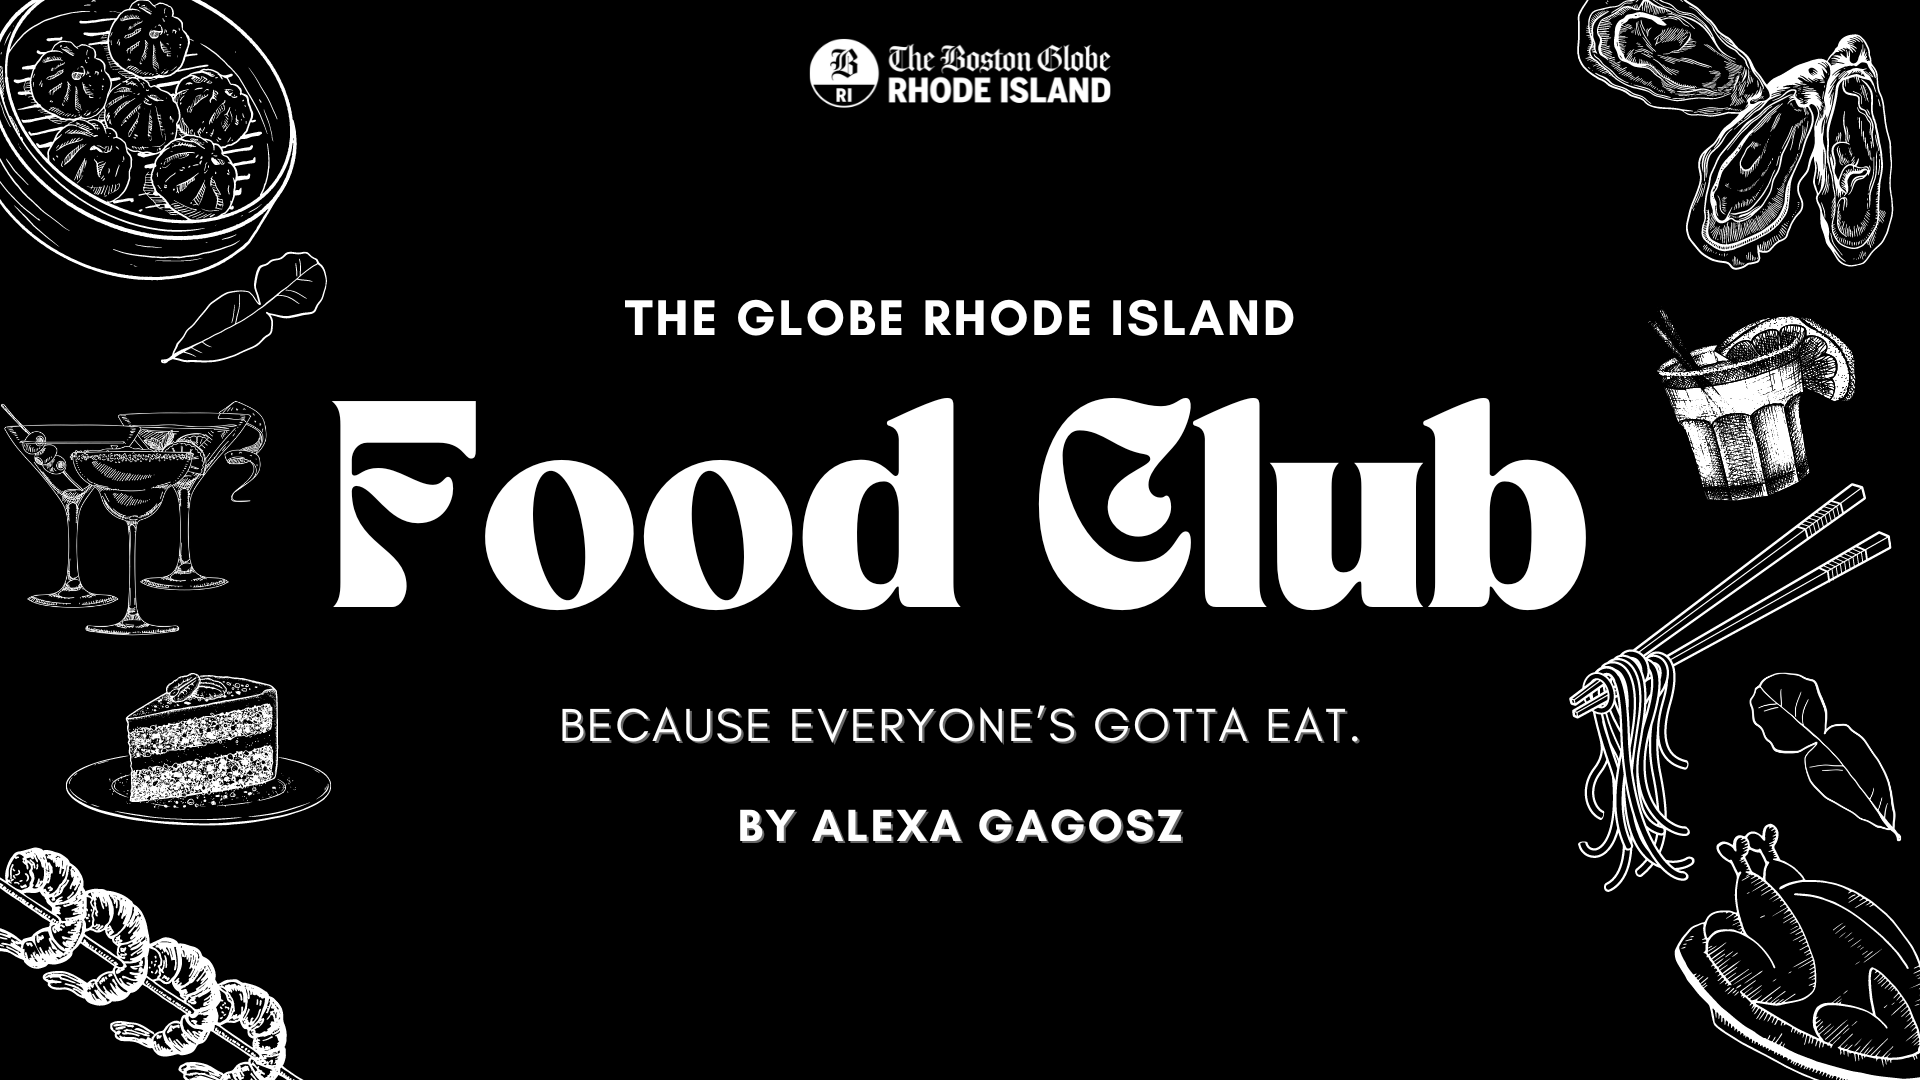 RI Food & Dining - The Boston Globe